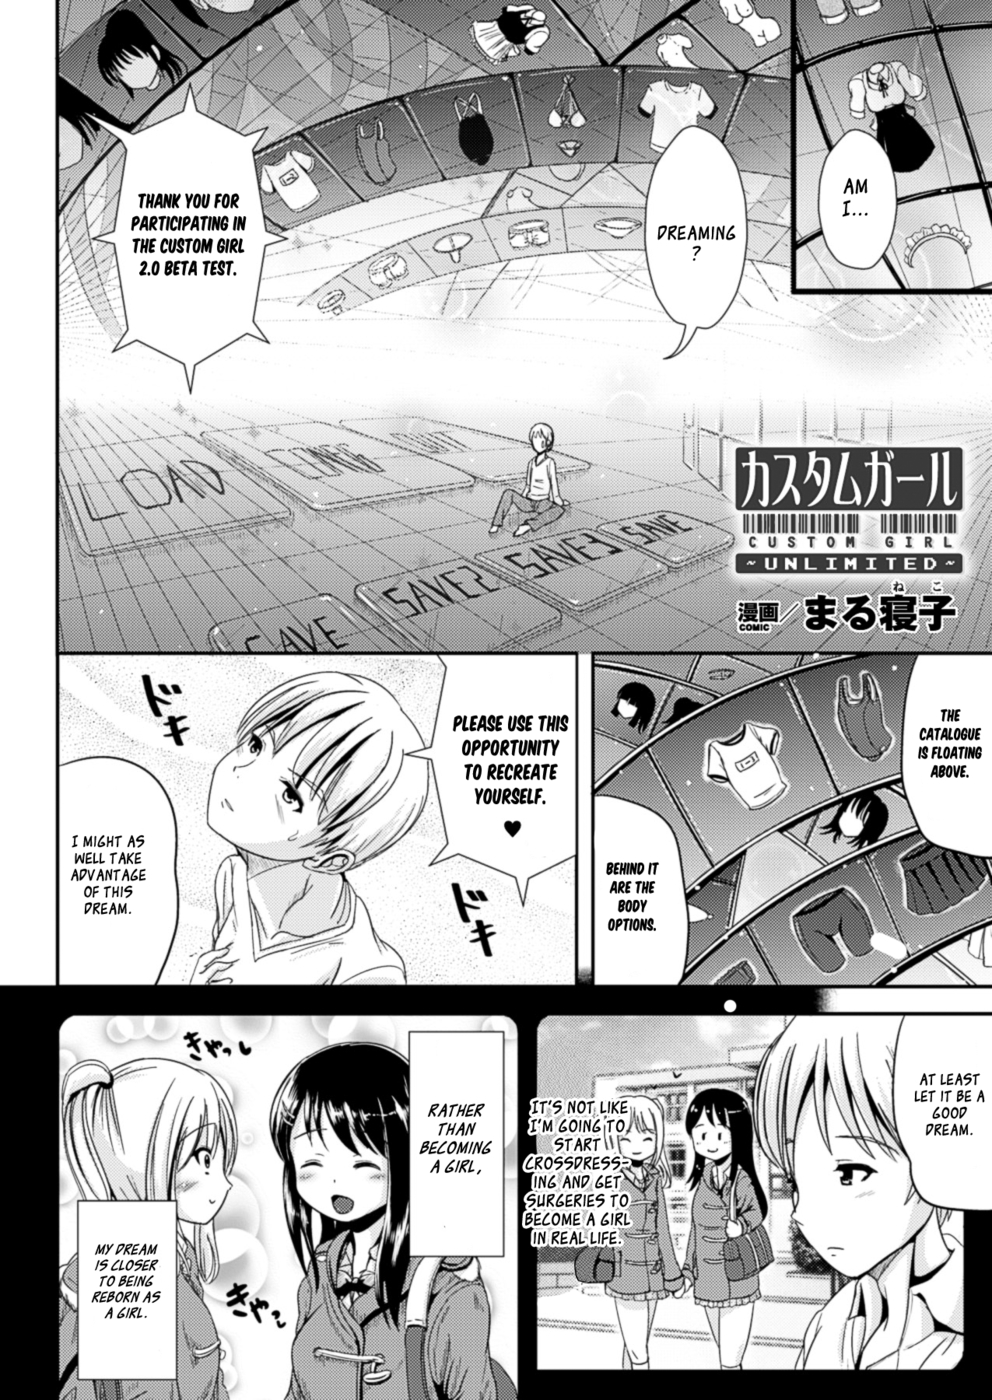 Hentai Manga Comic-Custom Girl Unlimited-Read-2